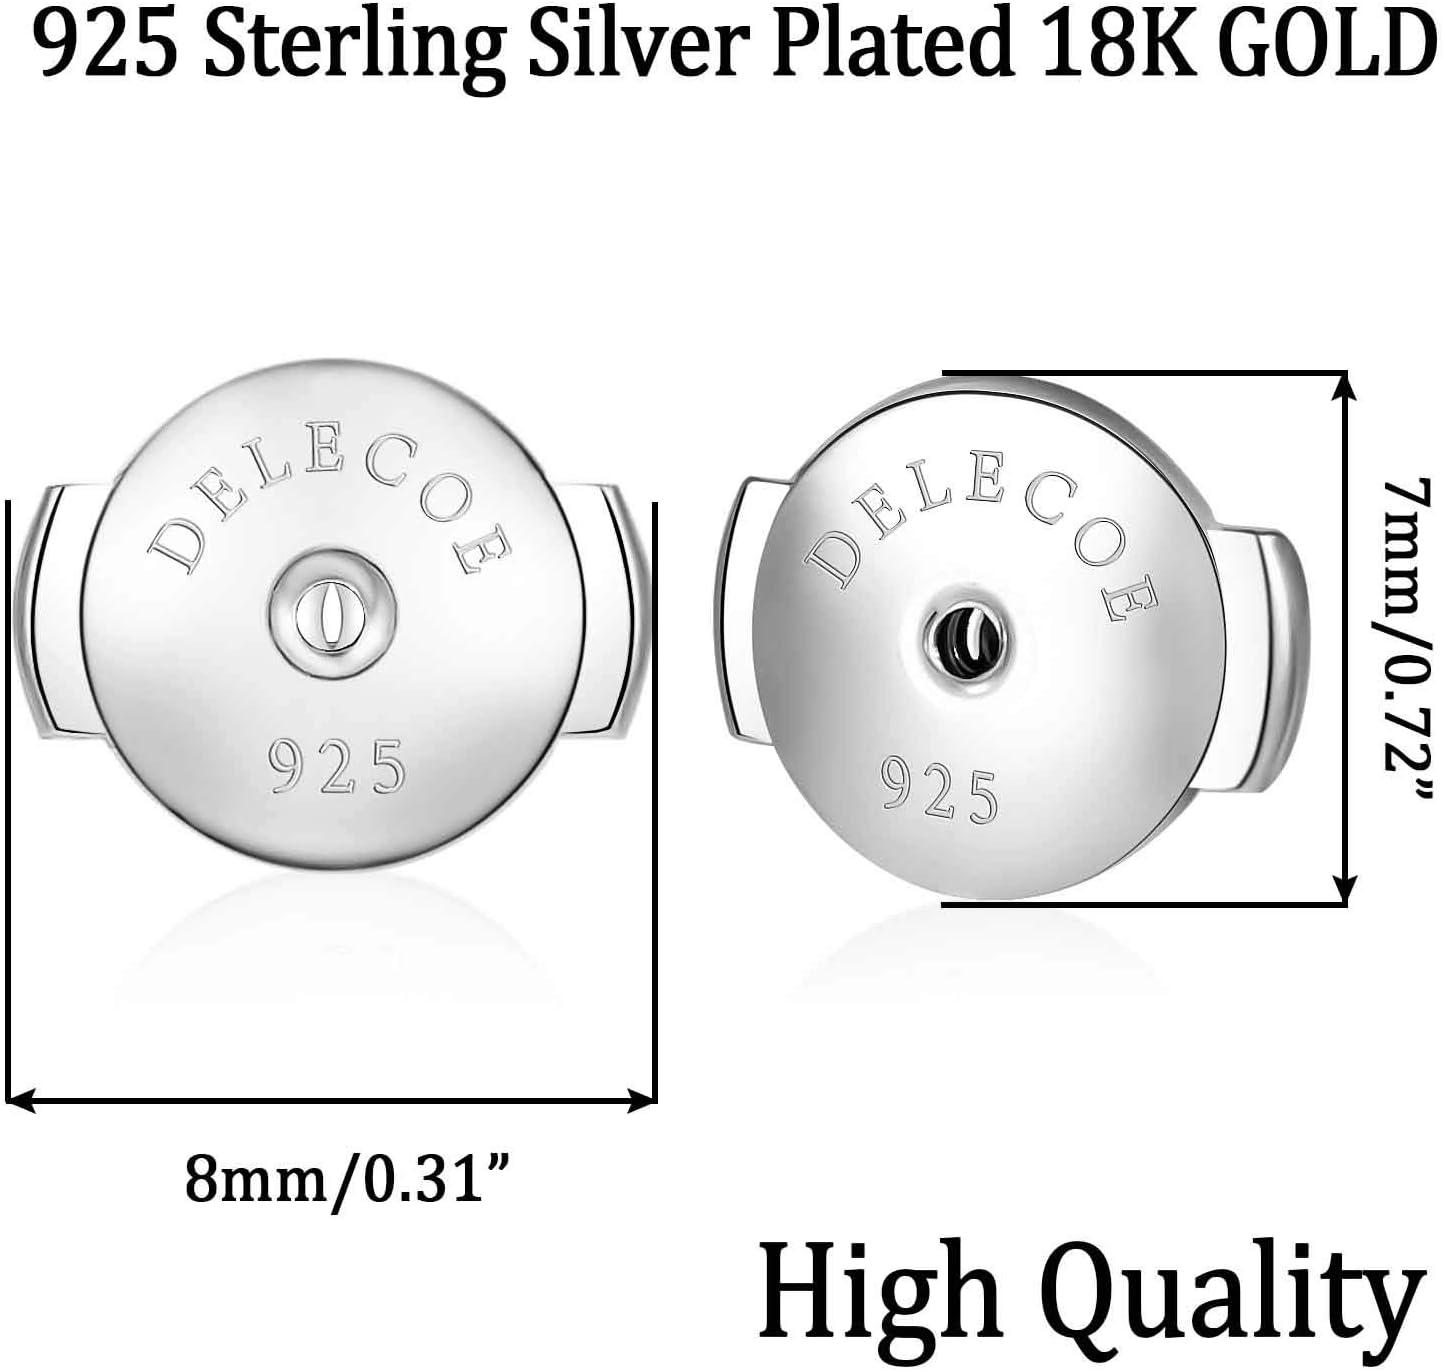 DELECOE Earring Backs,18K Gold Plated Threaded Screw Maldives